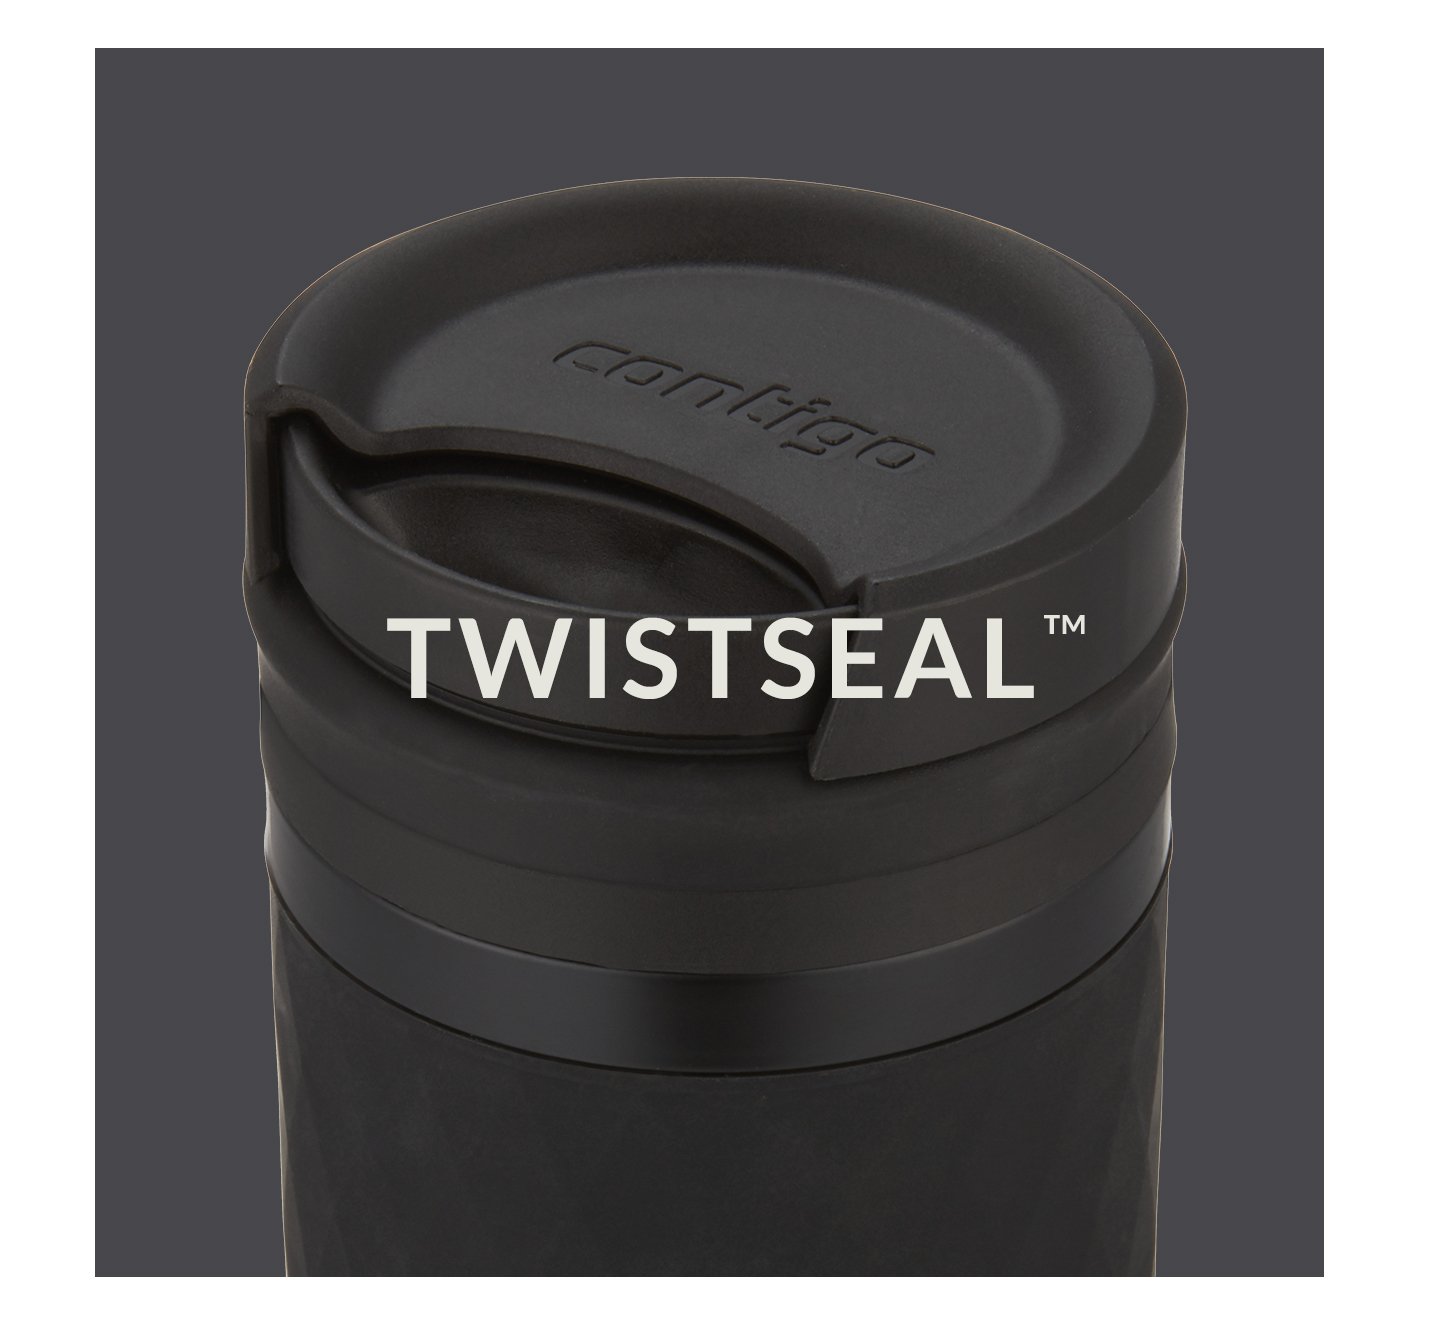 Contigo Stainless Steel Travel Mug with TWISTSEAL Lid Black All